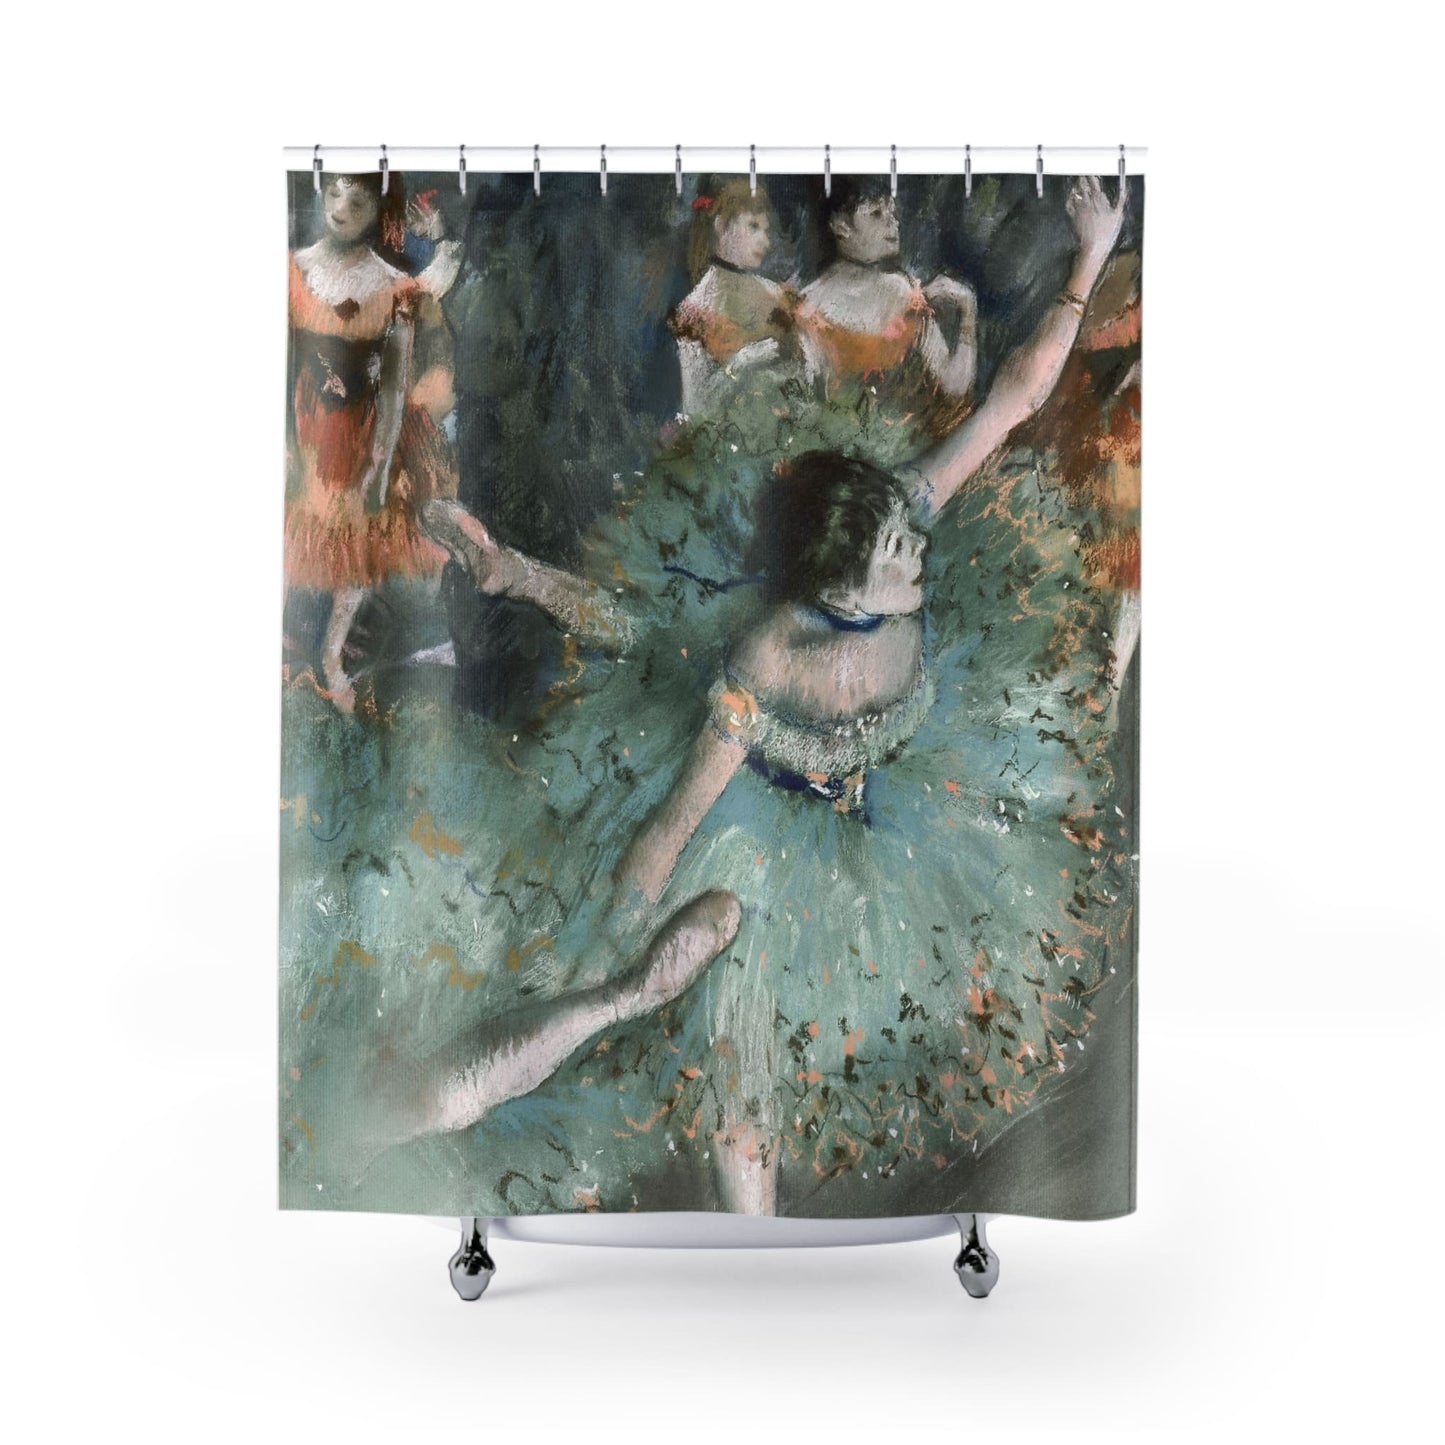 Ballet Painting Shower Curtain with Edgar Degas design, elegant bathroom decor featuring Degas's ballet artwork.